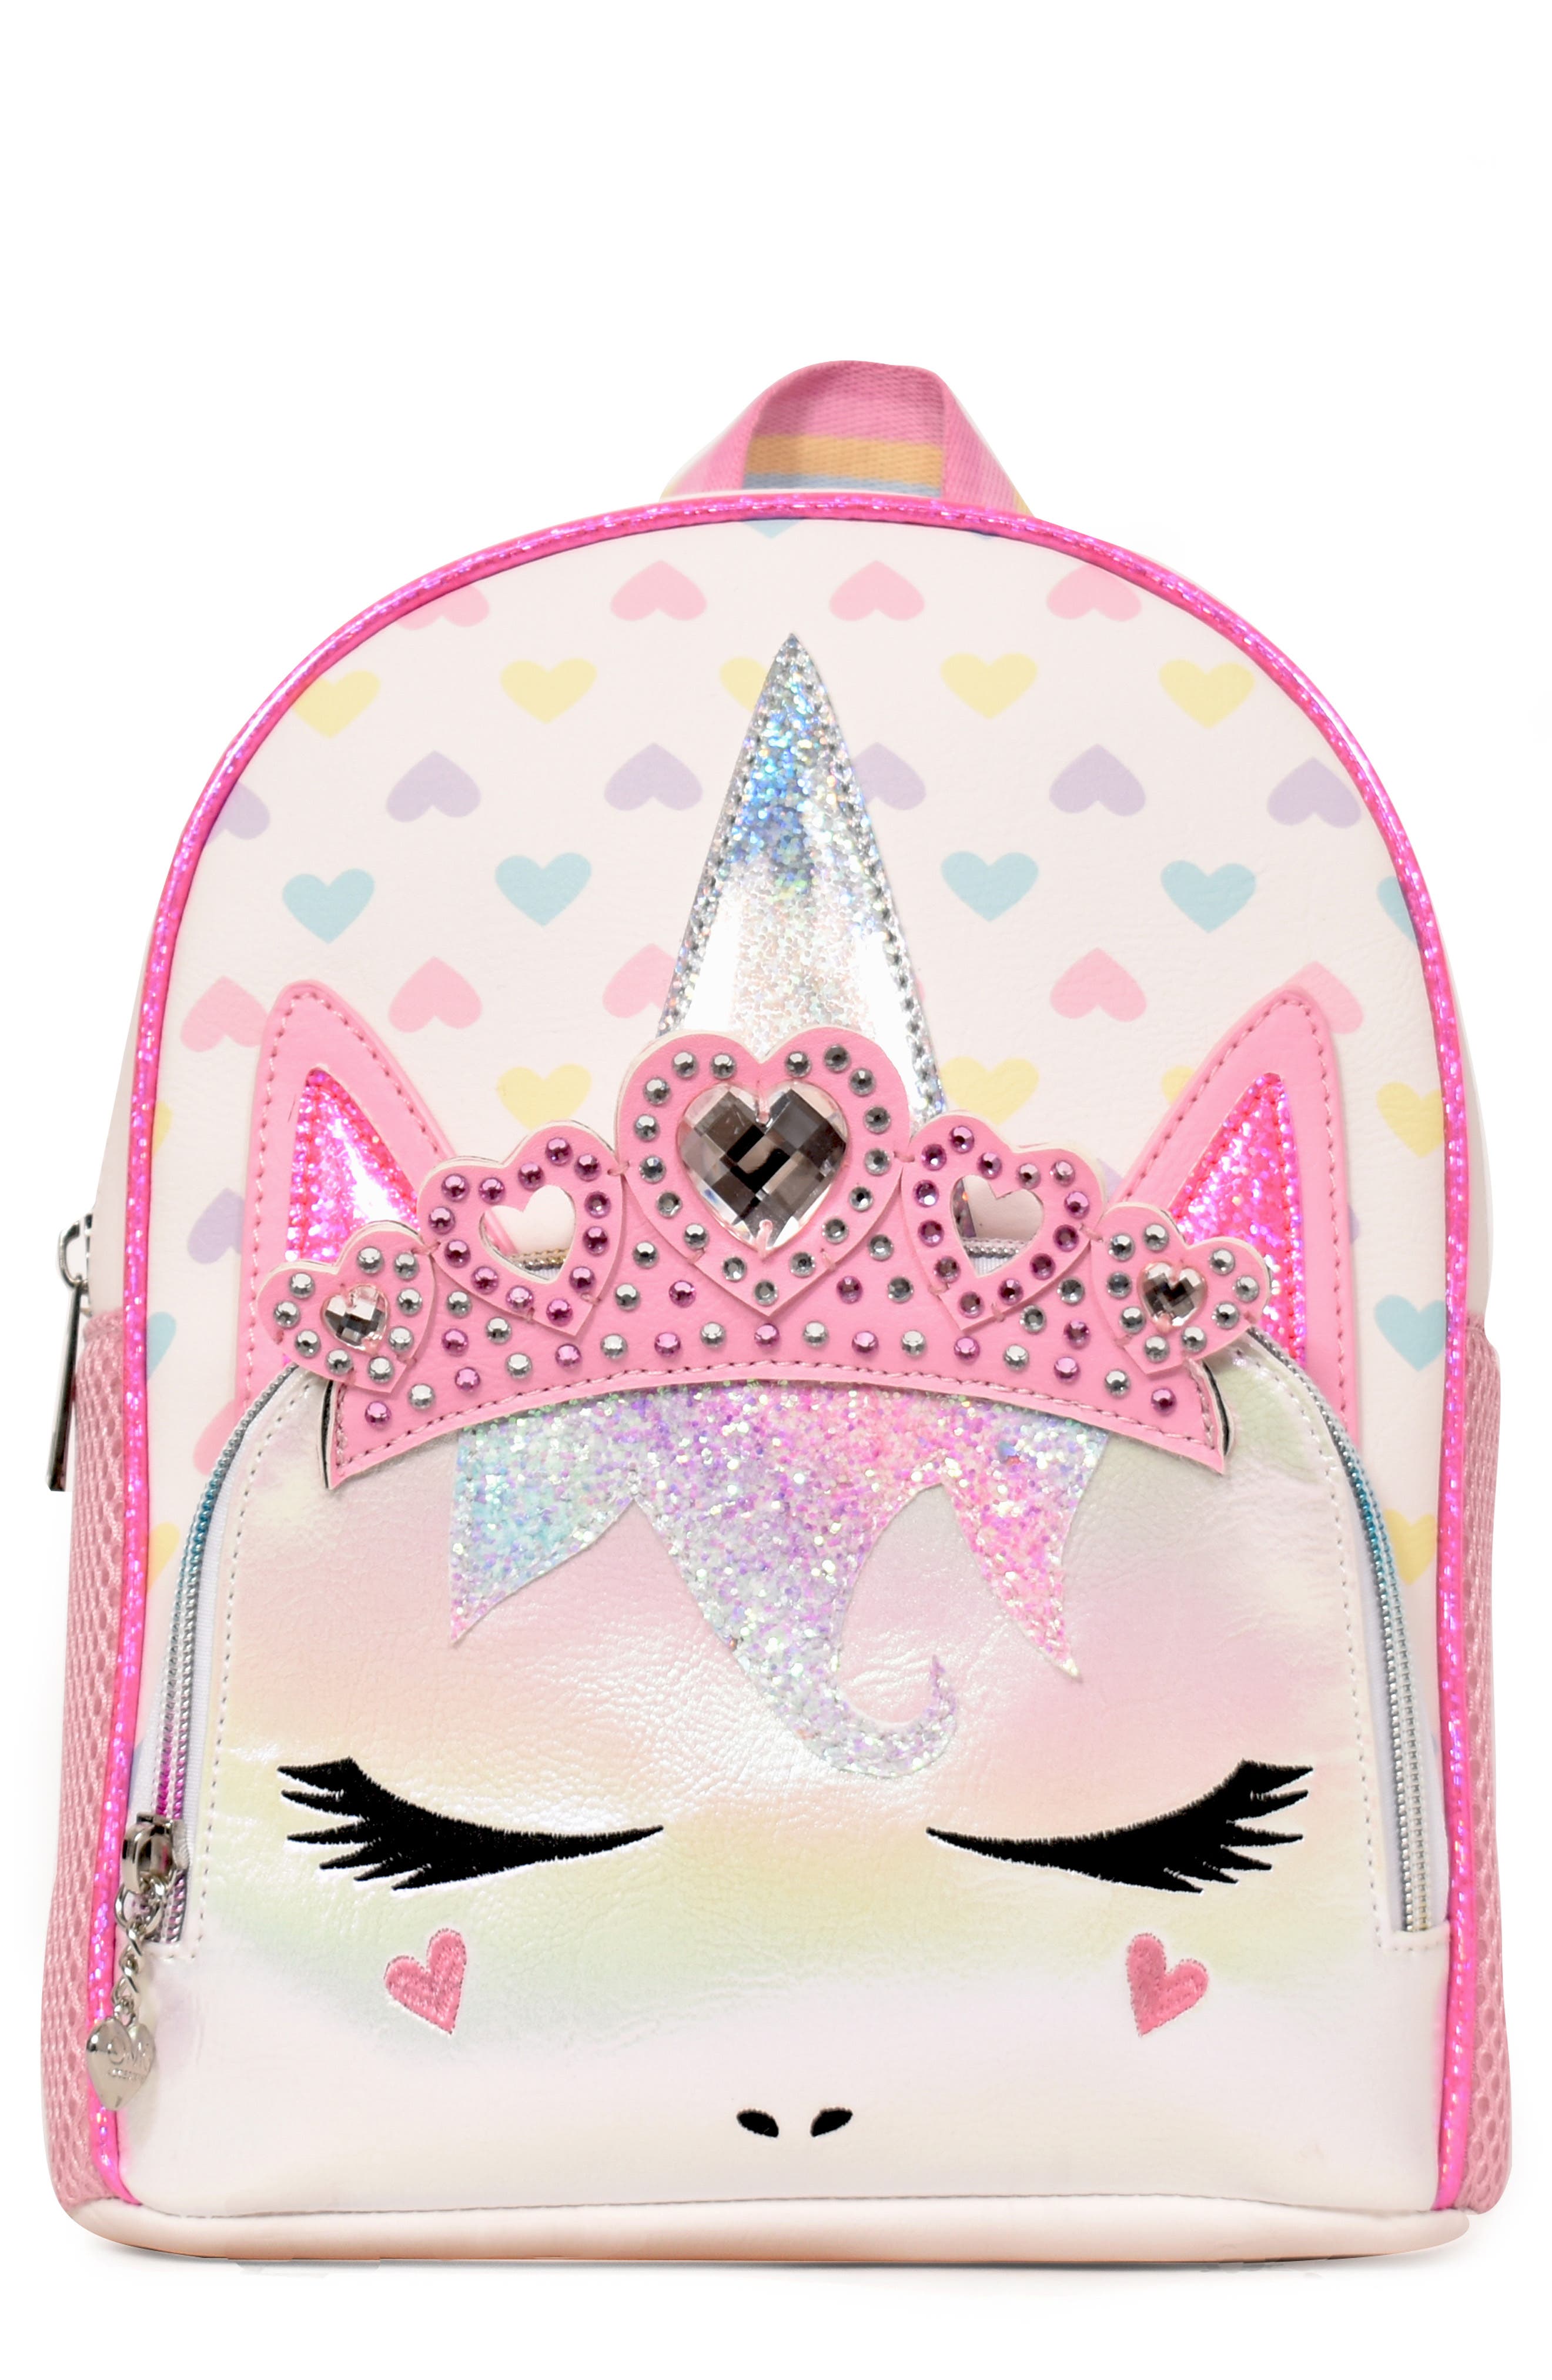 Girls Personalised Glitter Queen Princess Crown Book Bag School Childrens Gift Black/Multi Glitter Print